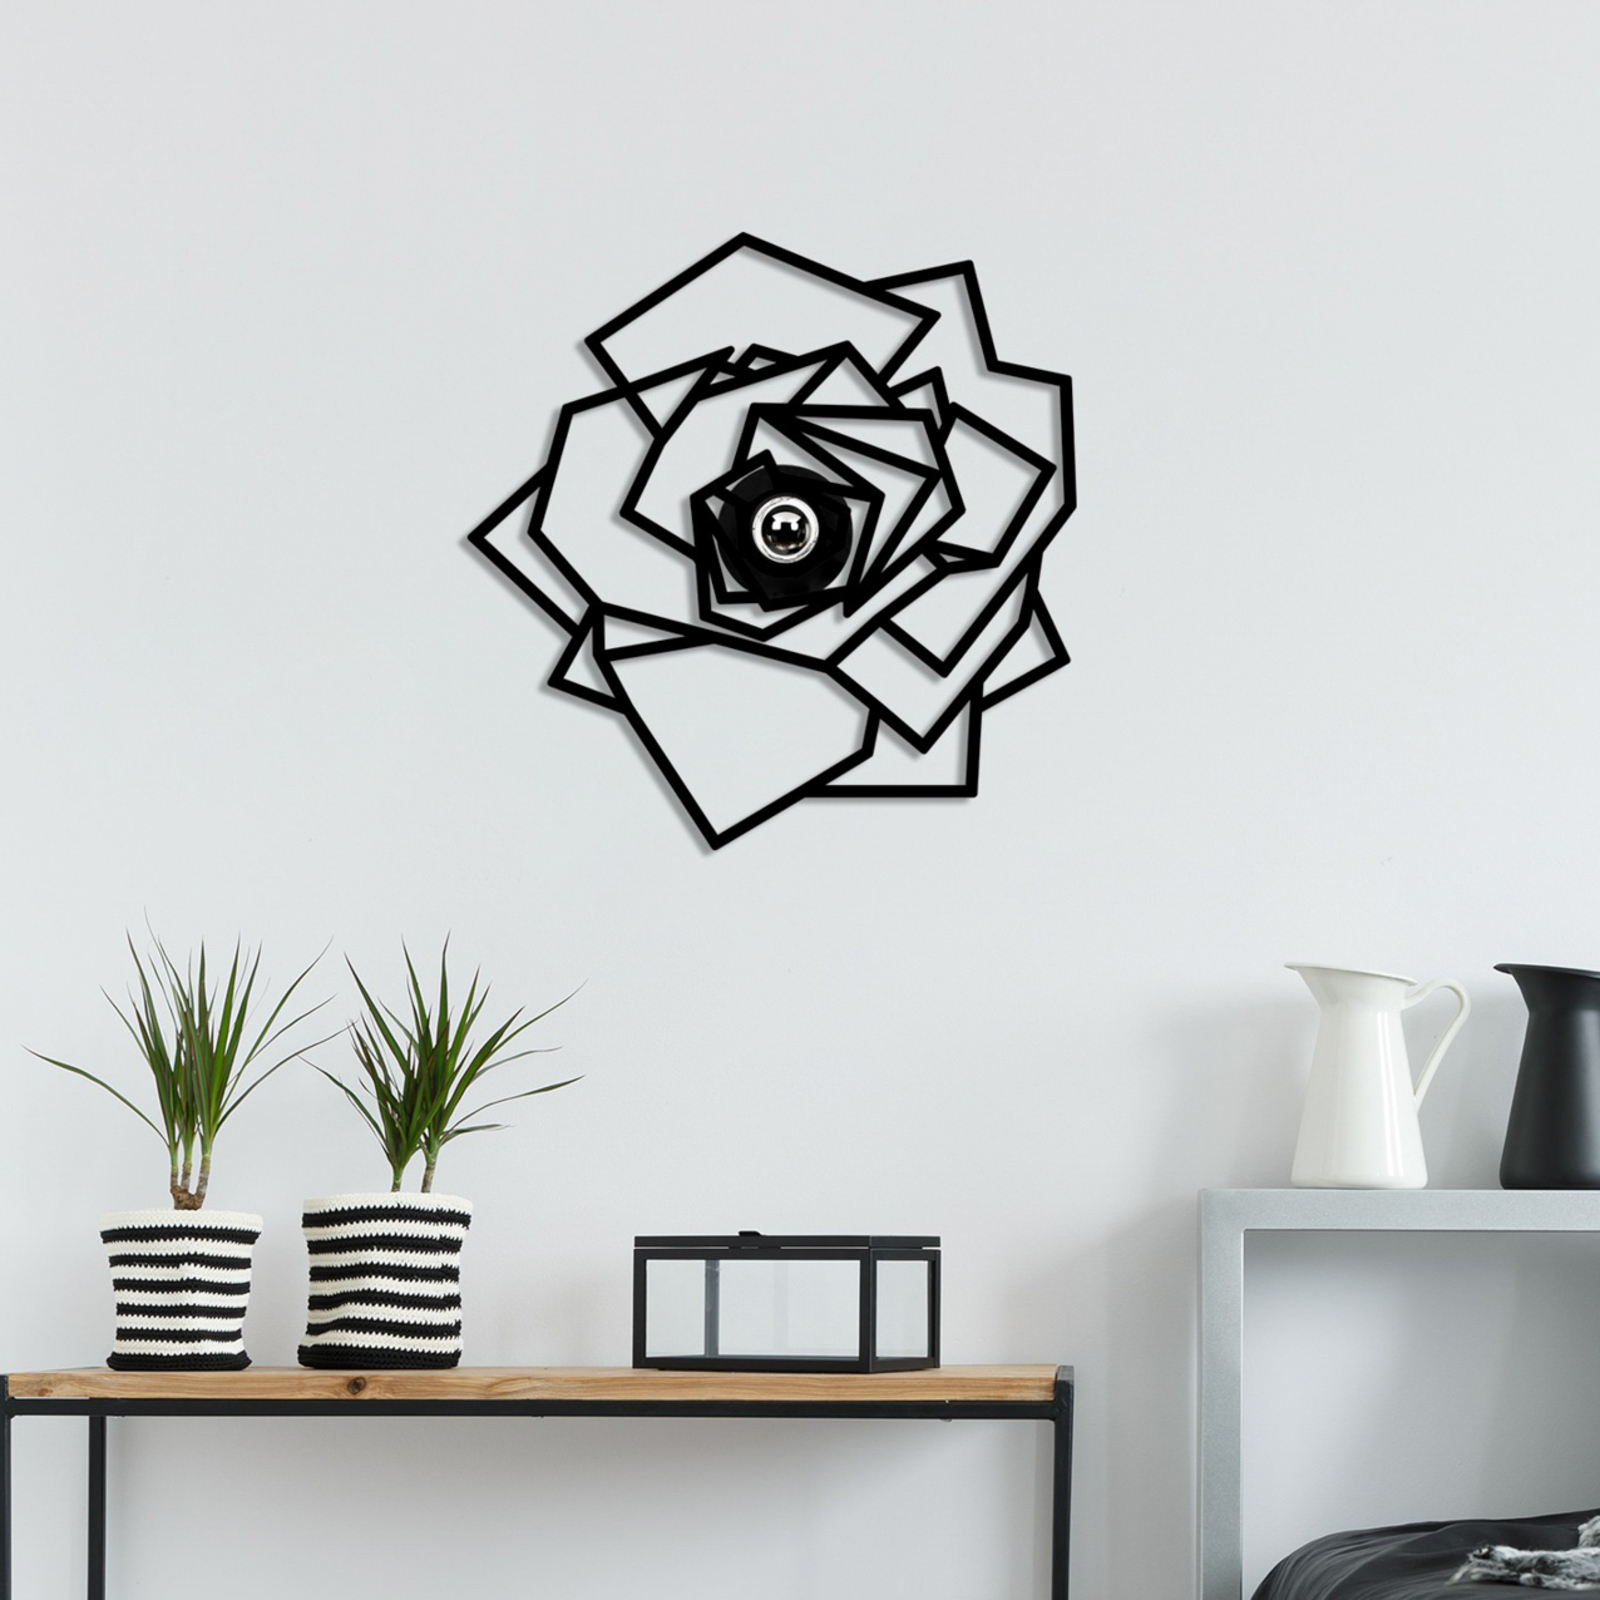 W-042 wall lamp, black flower design, laser-cut